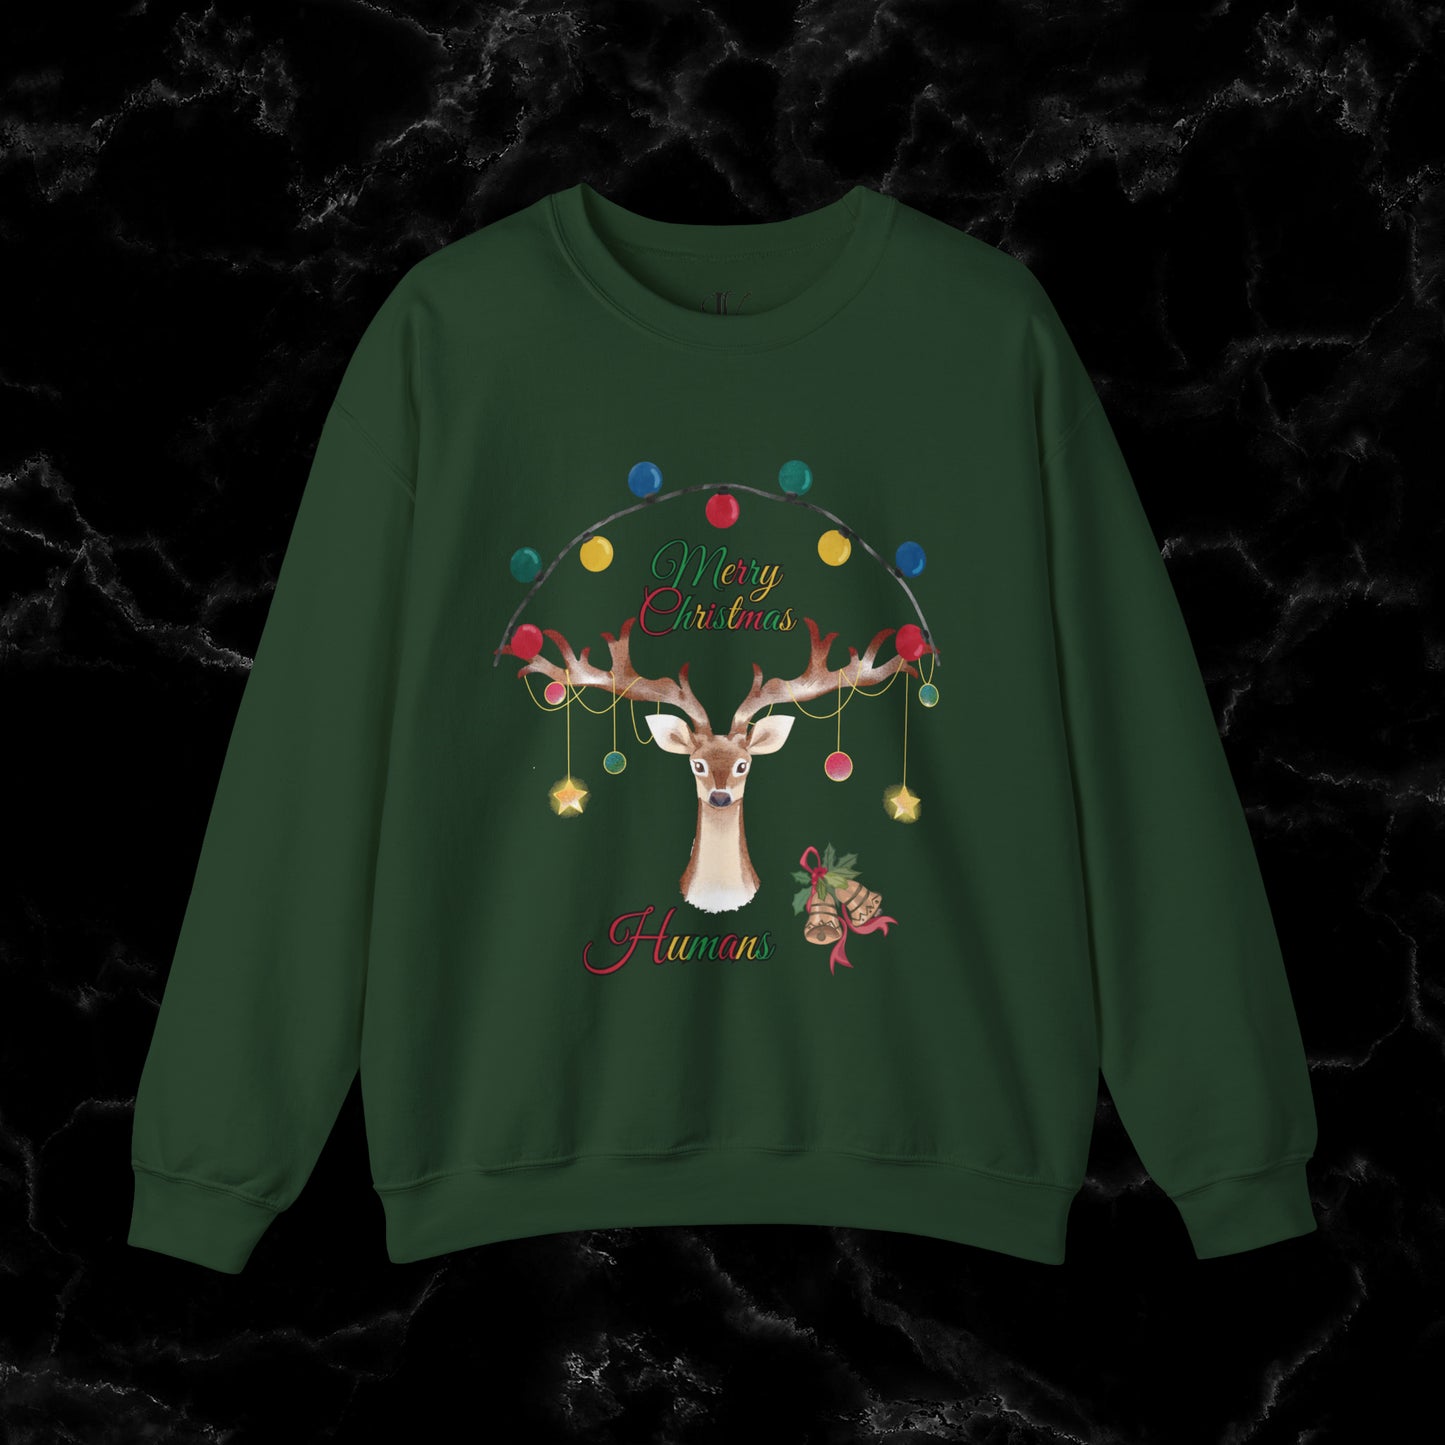 Merry Christmas Reindeer Sweatshirt - Christmas Crewneck for Festive Holiday Cheer | 'Merry Christmas Humans' Sweatshirt S Forest Green 